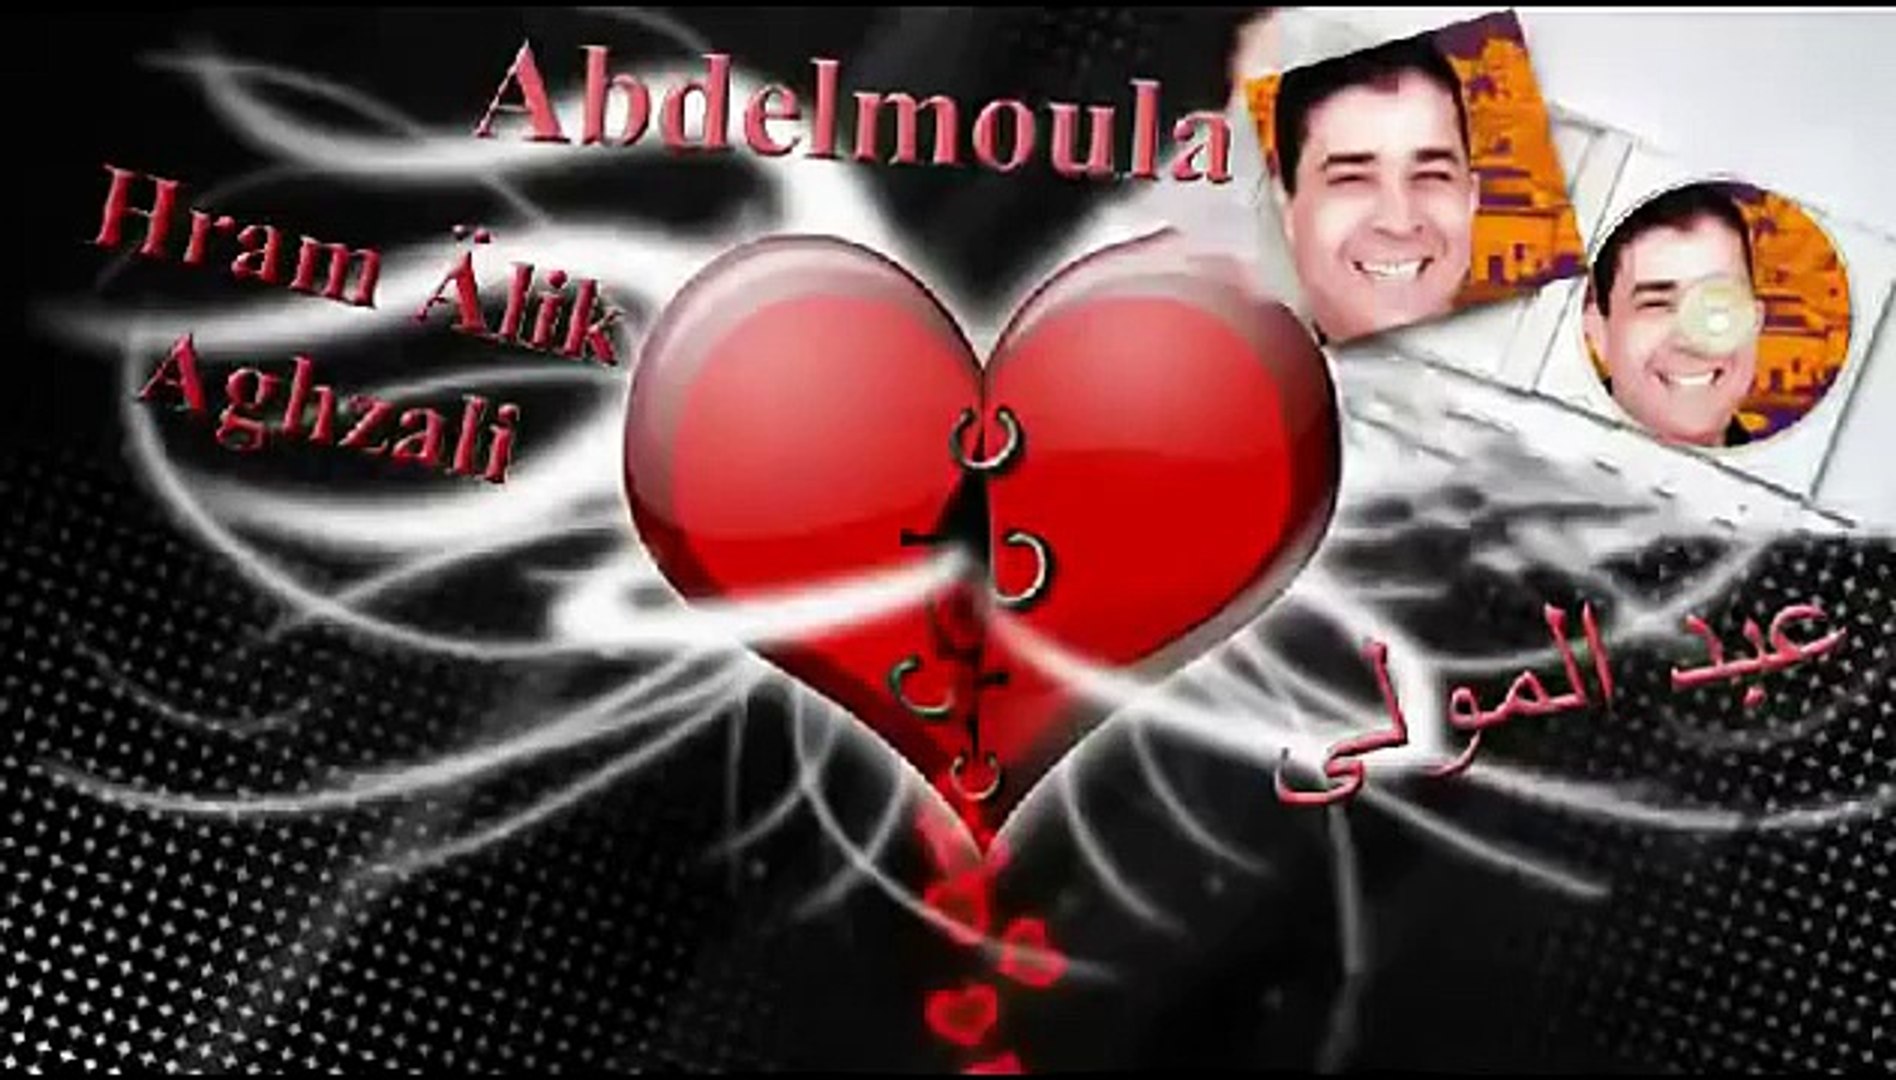 Abdelmoula Hram 3lik Ya Ghzali - فيديو Dailymotion